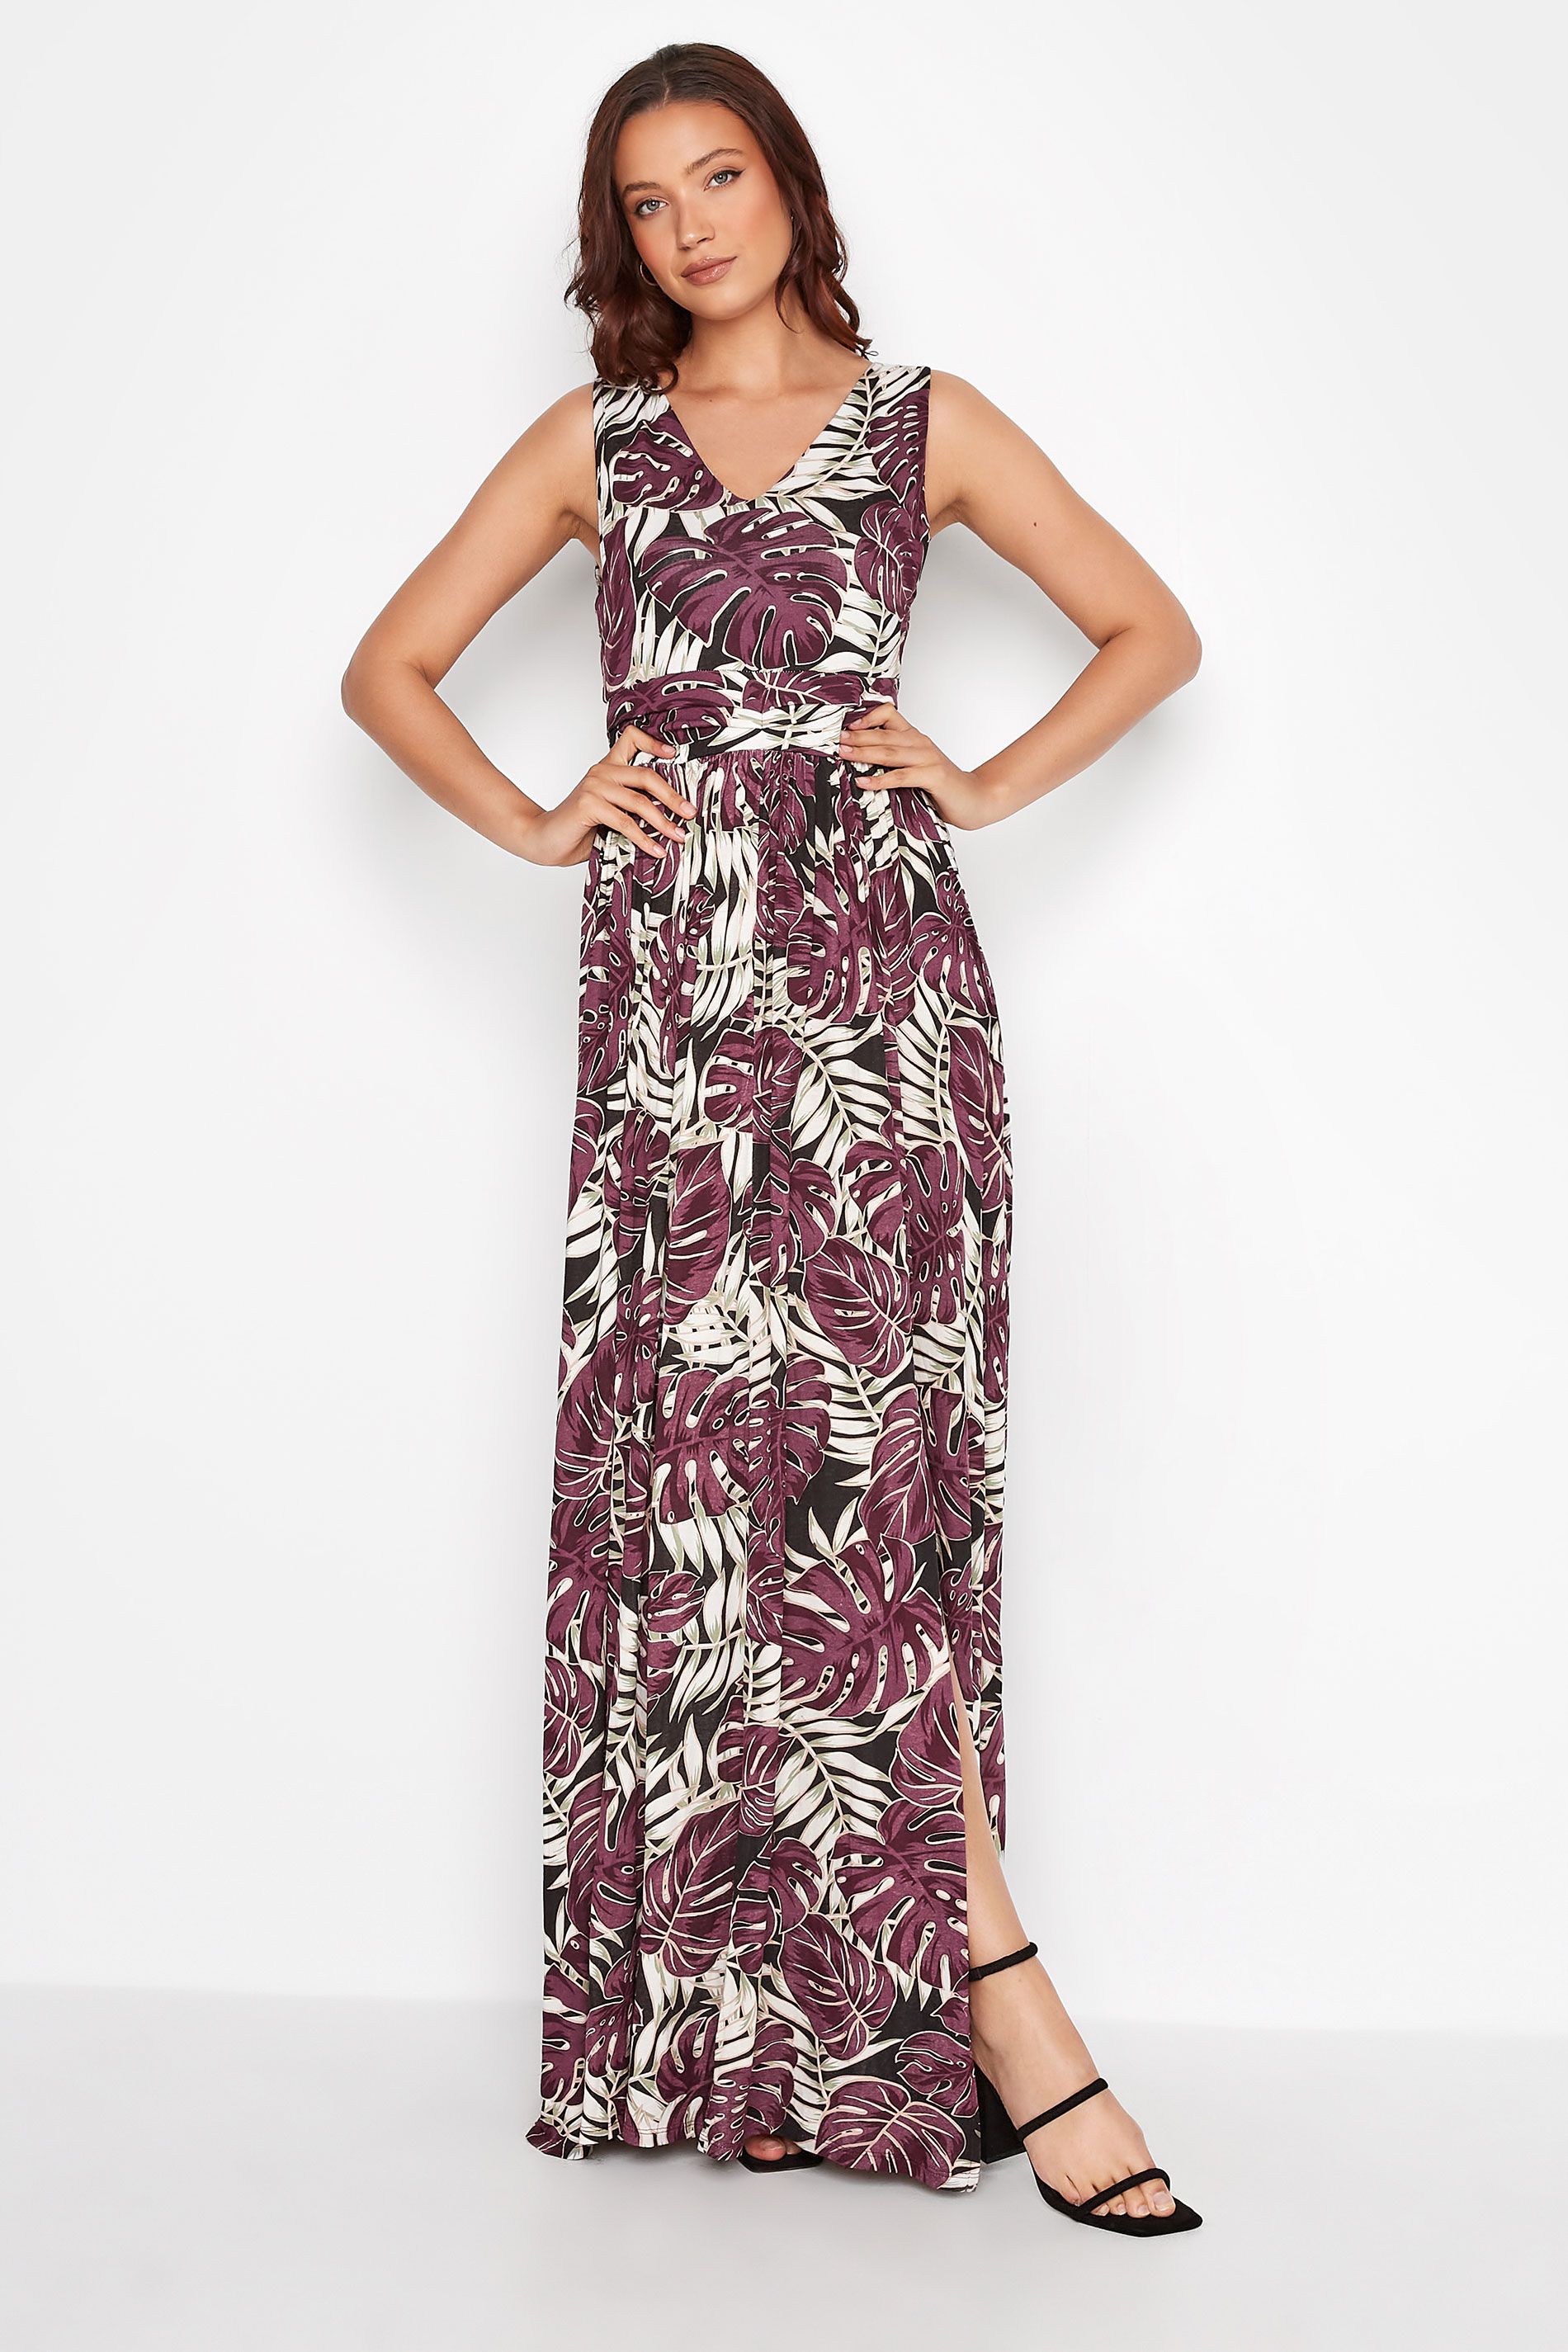 Tall Women's Purple Floral Side Slit Maxi Dress | Long Tall Sally  2